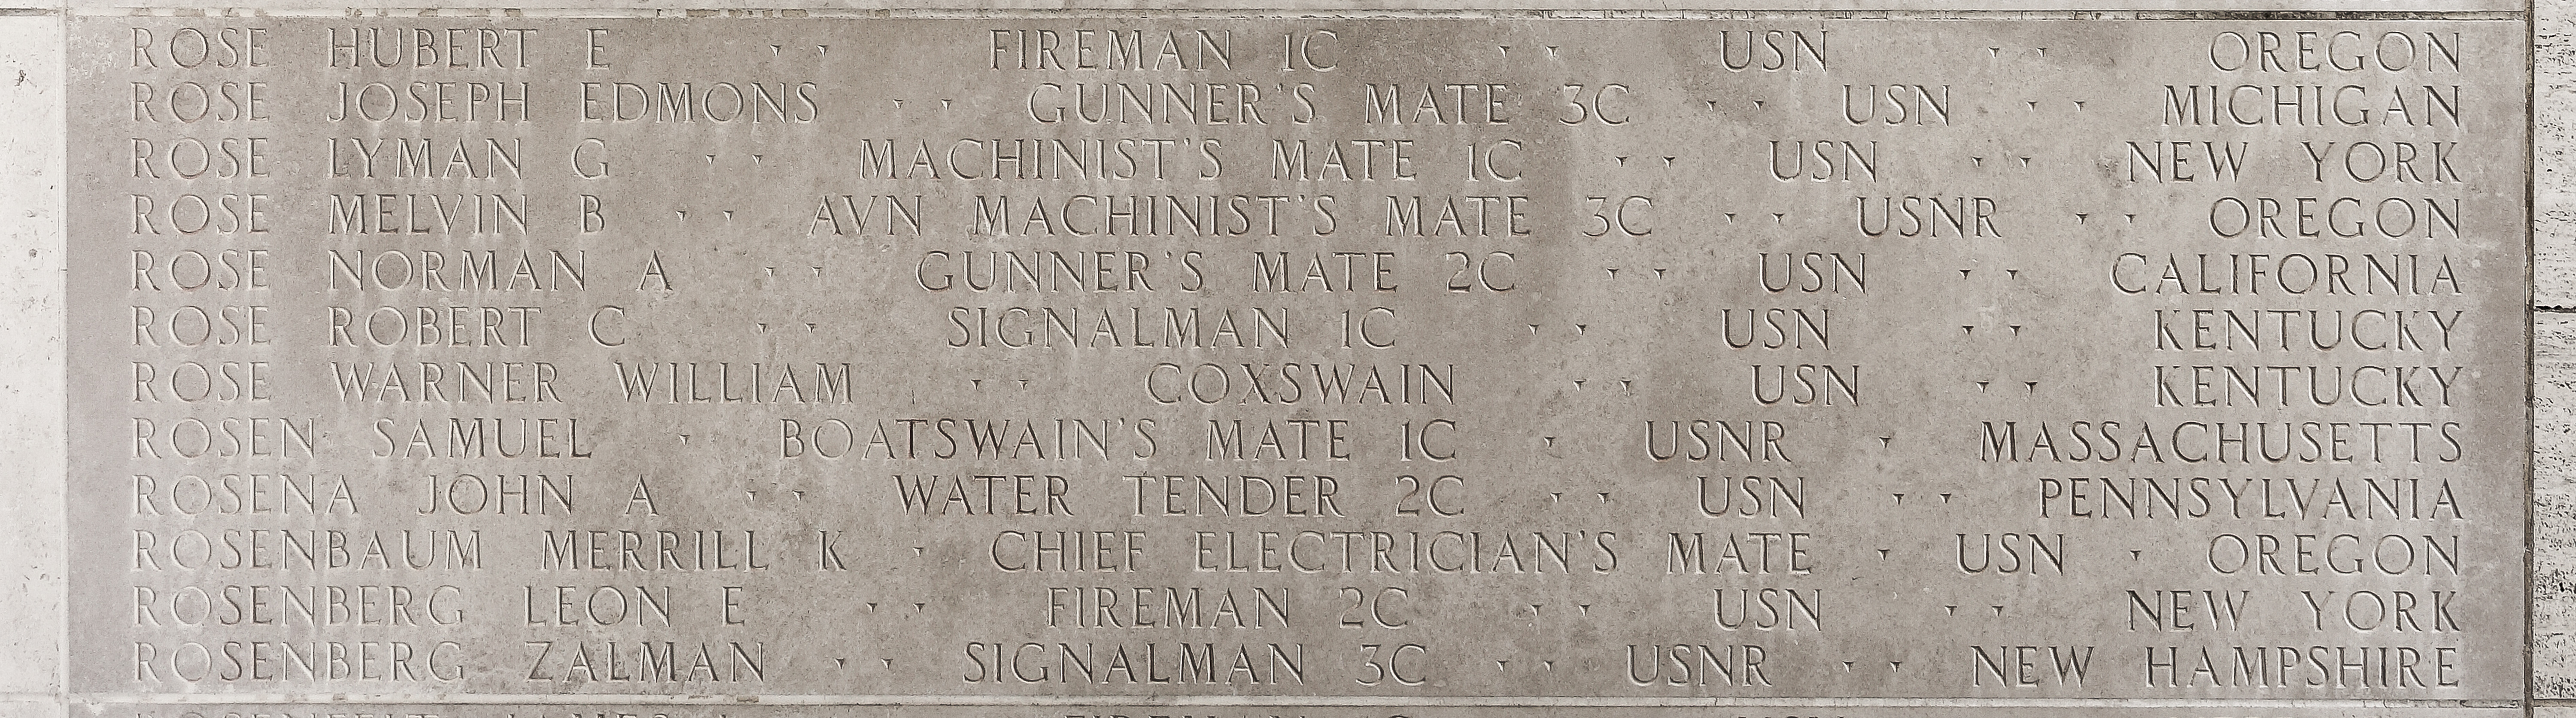 Robert C. Rose, Signalman First Class